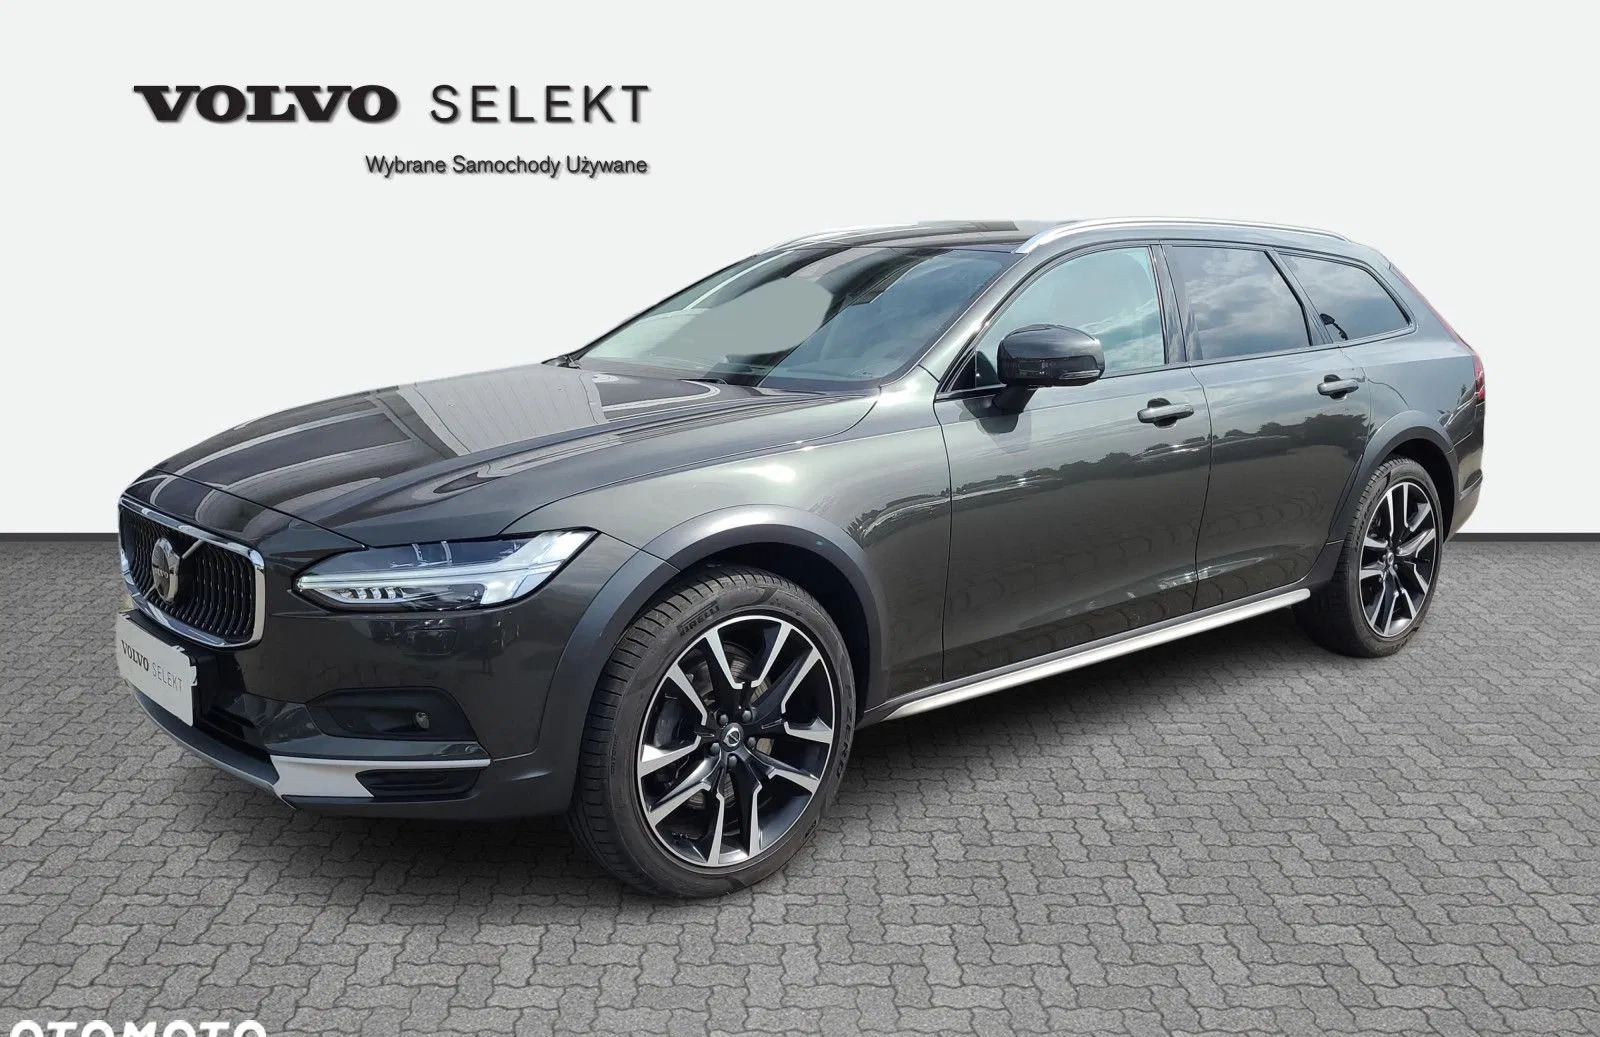 lubelskie Volvo V90 Cross Country cena 232000 przebieg: 50000, rok produkcji 2020 z Sulechów